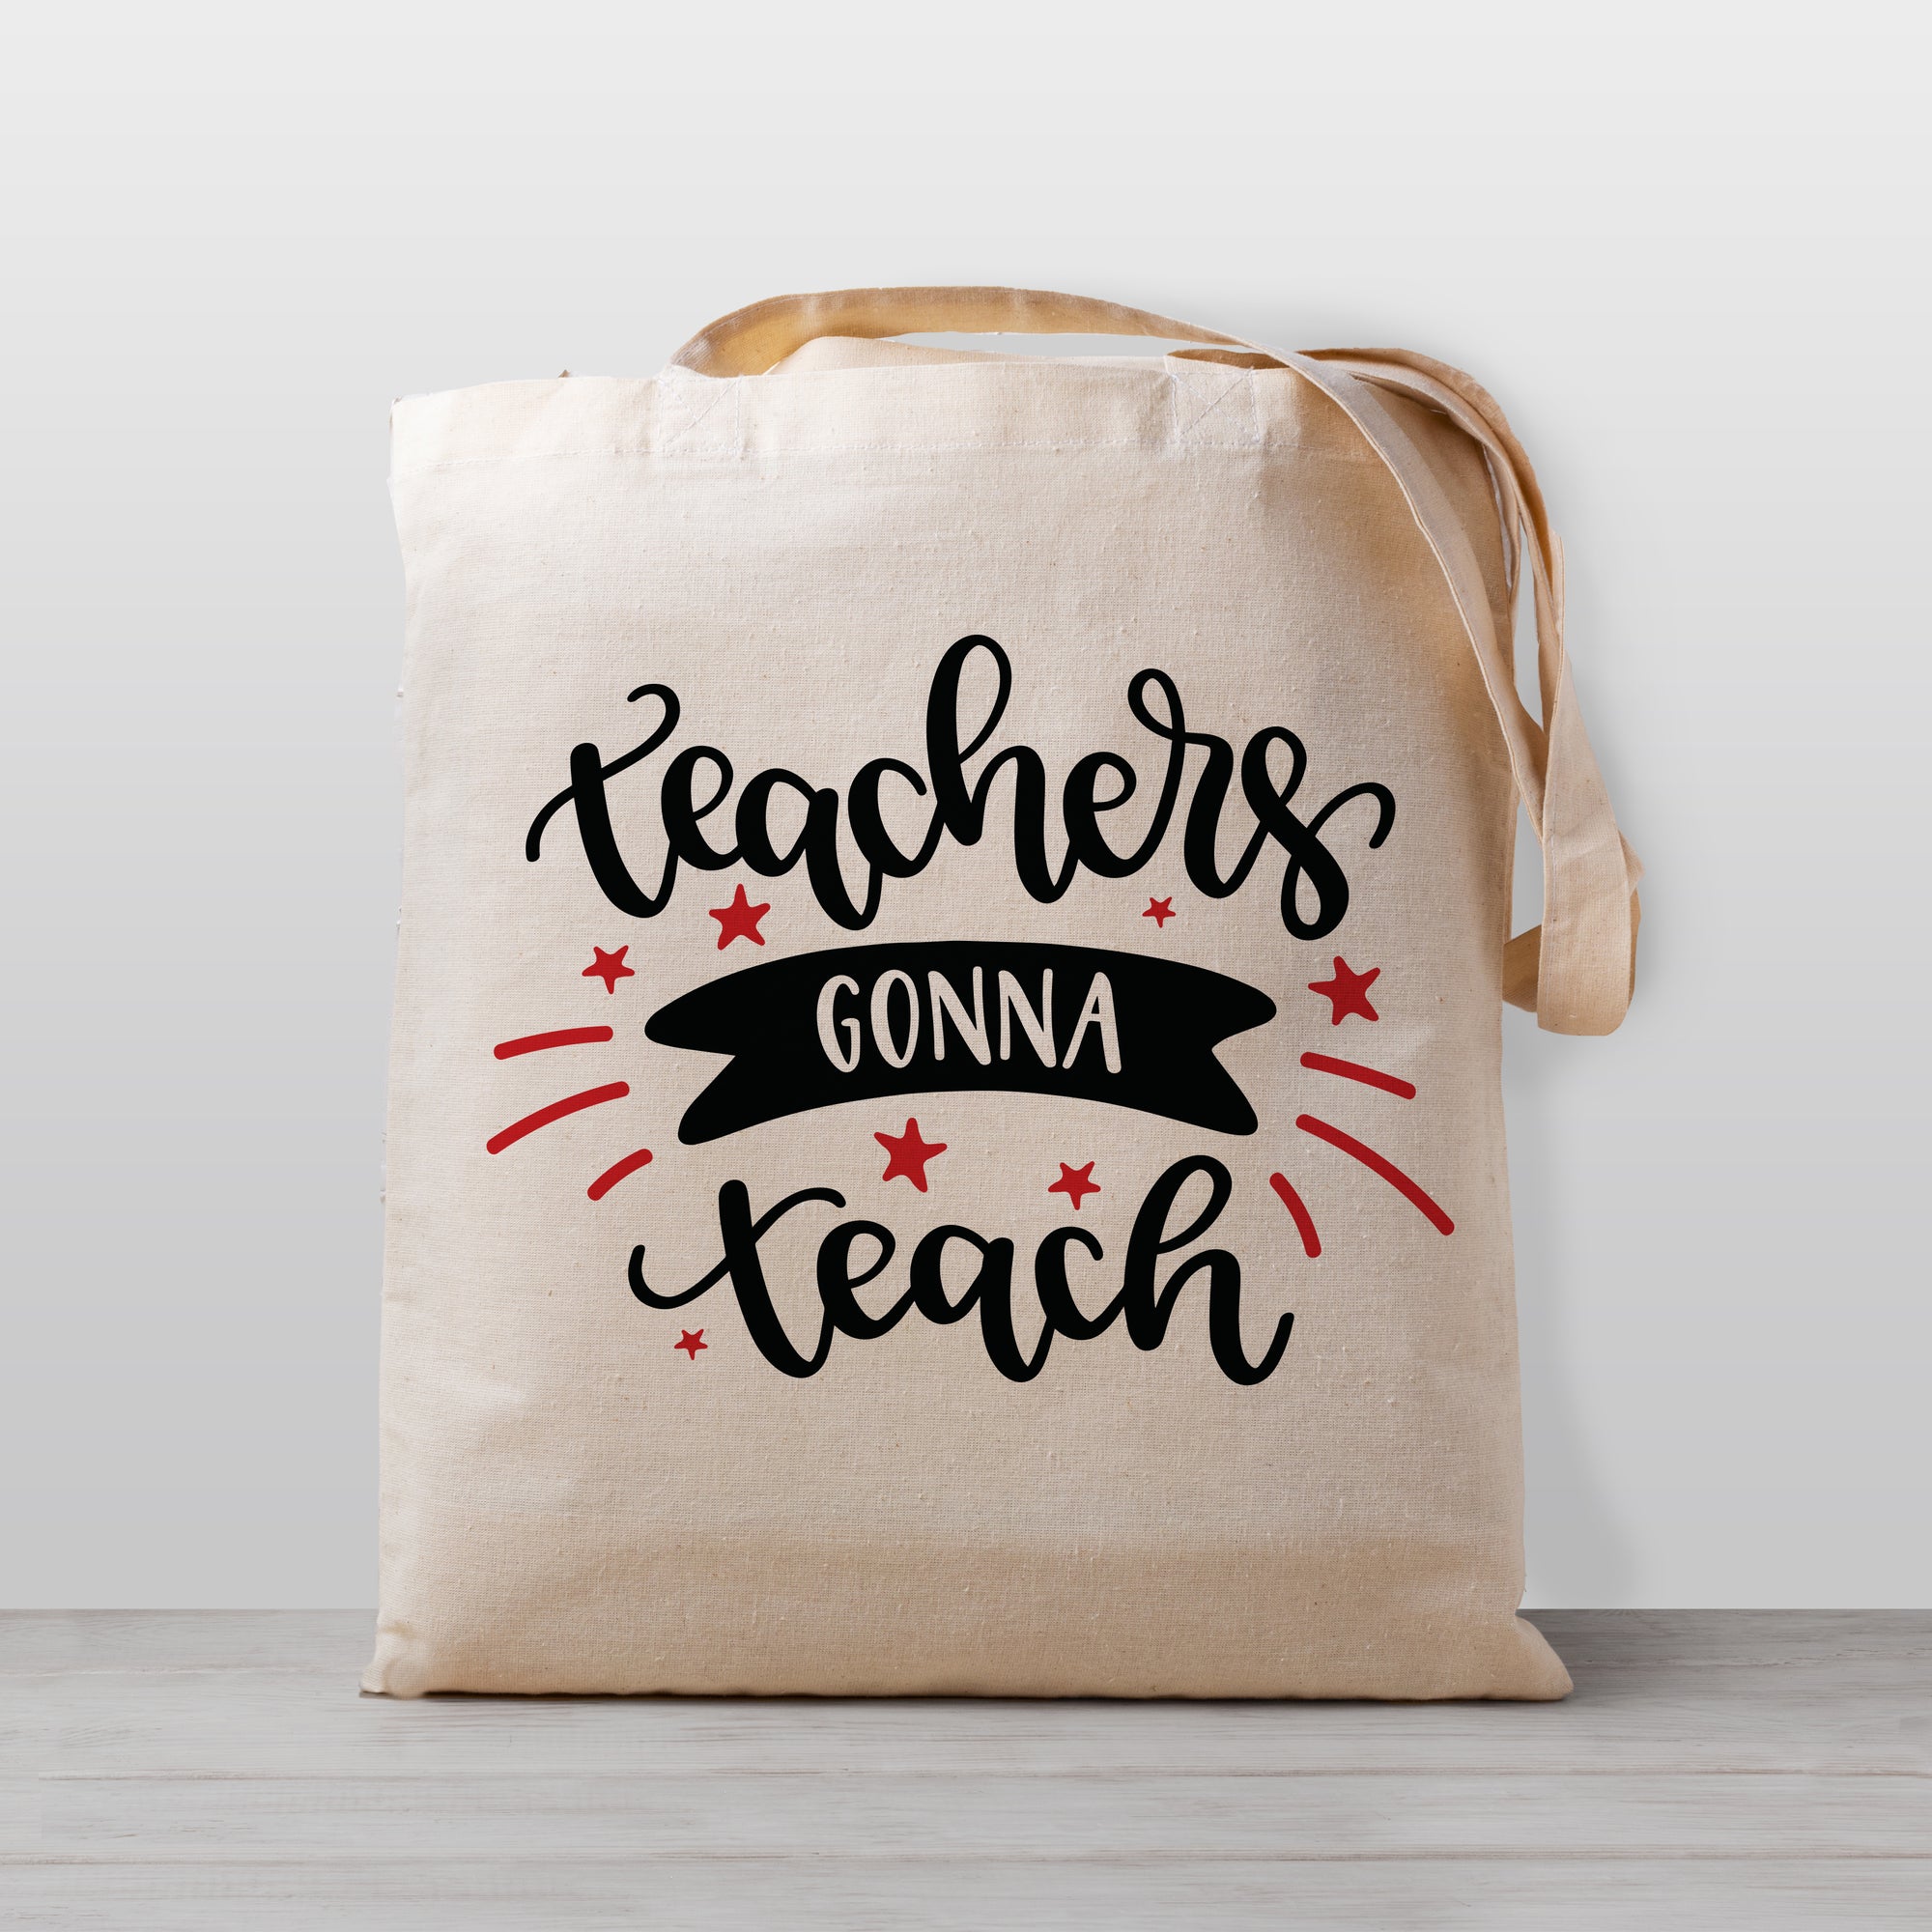 Teachers Gonna Teach Tote Bag